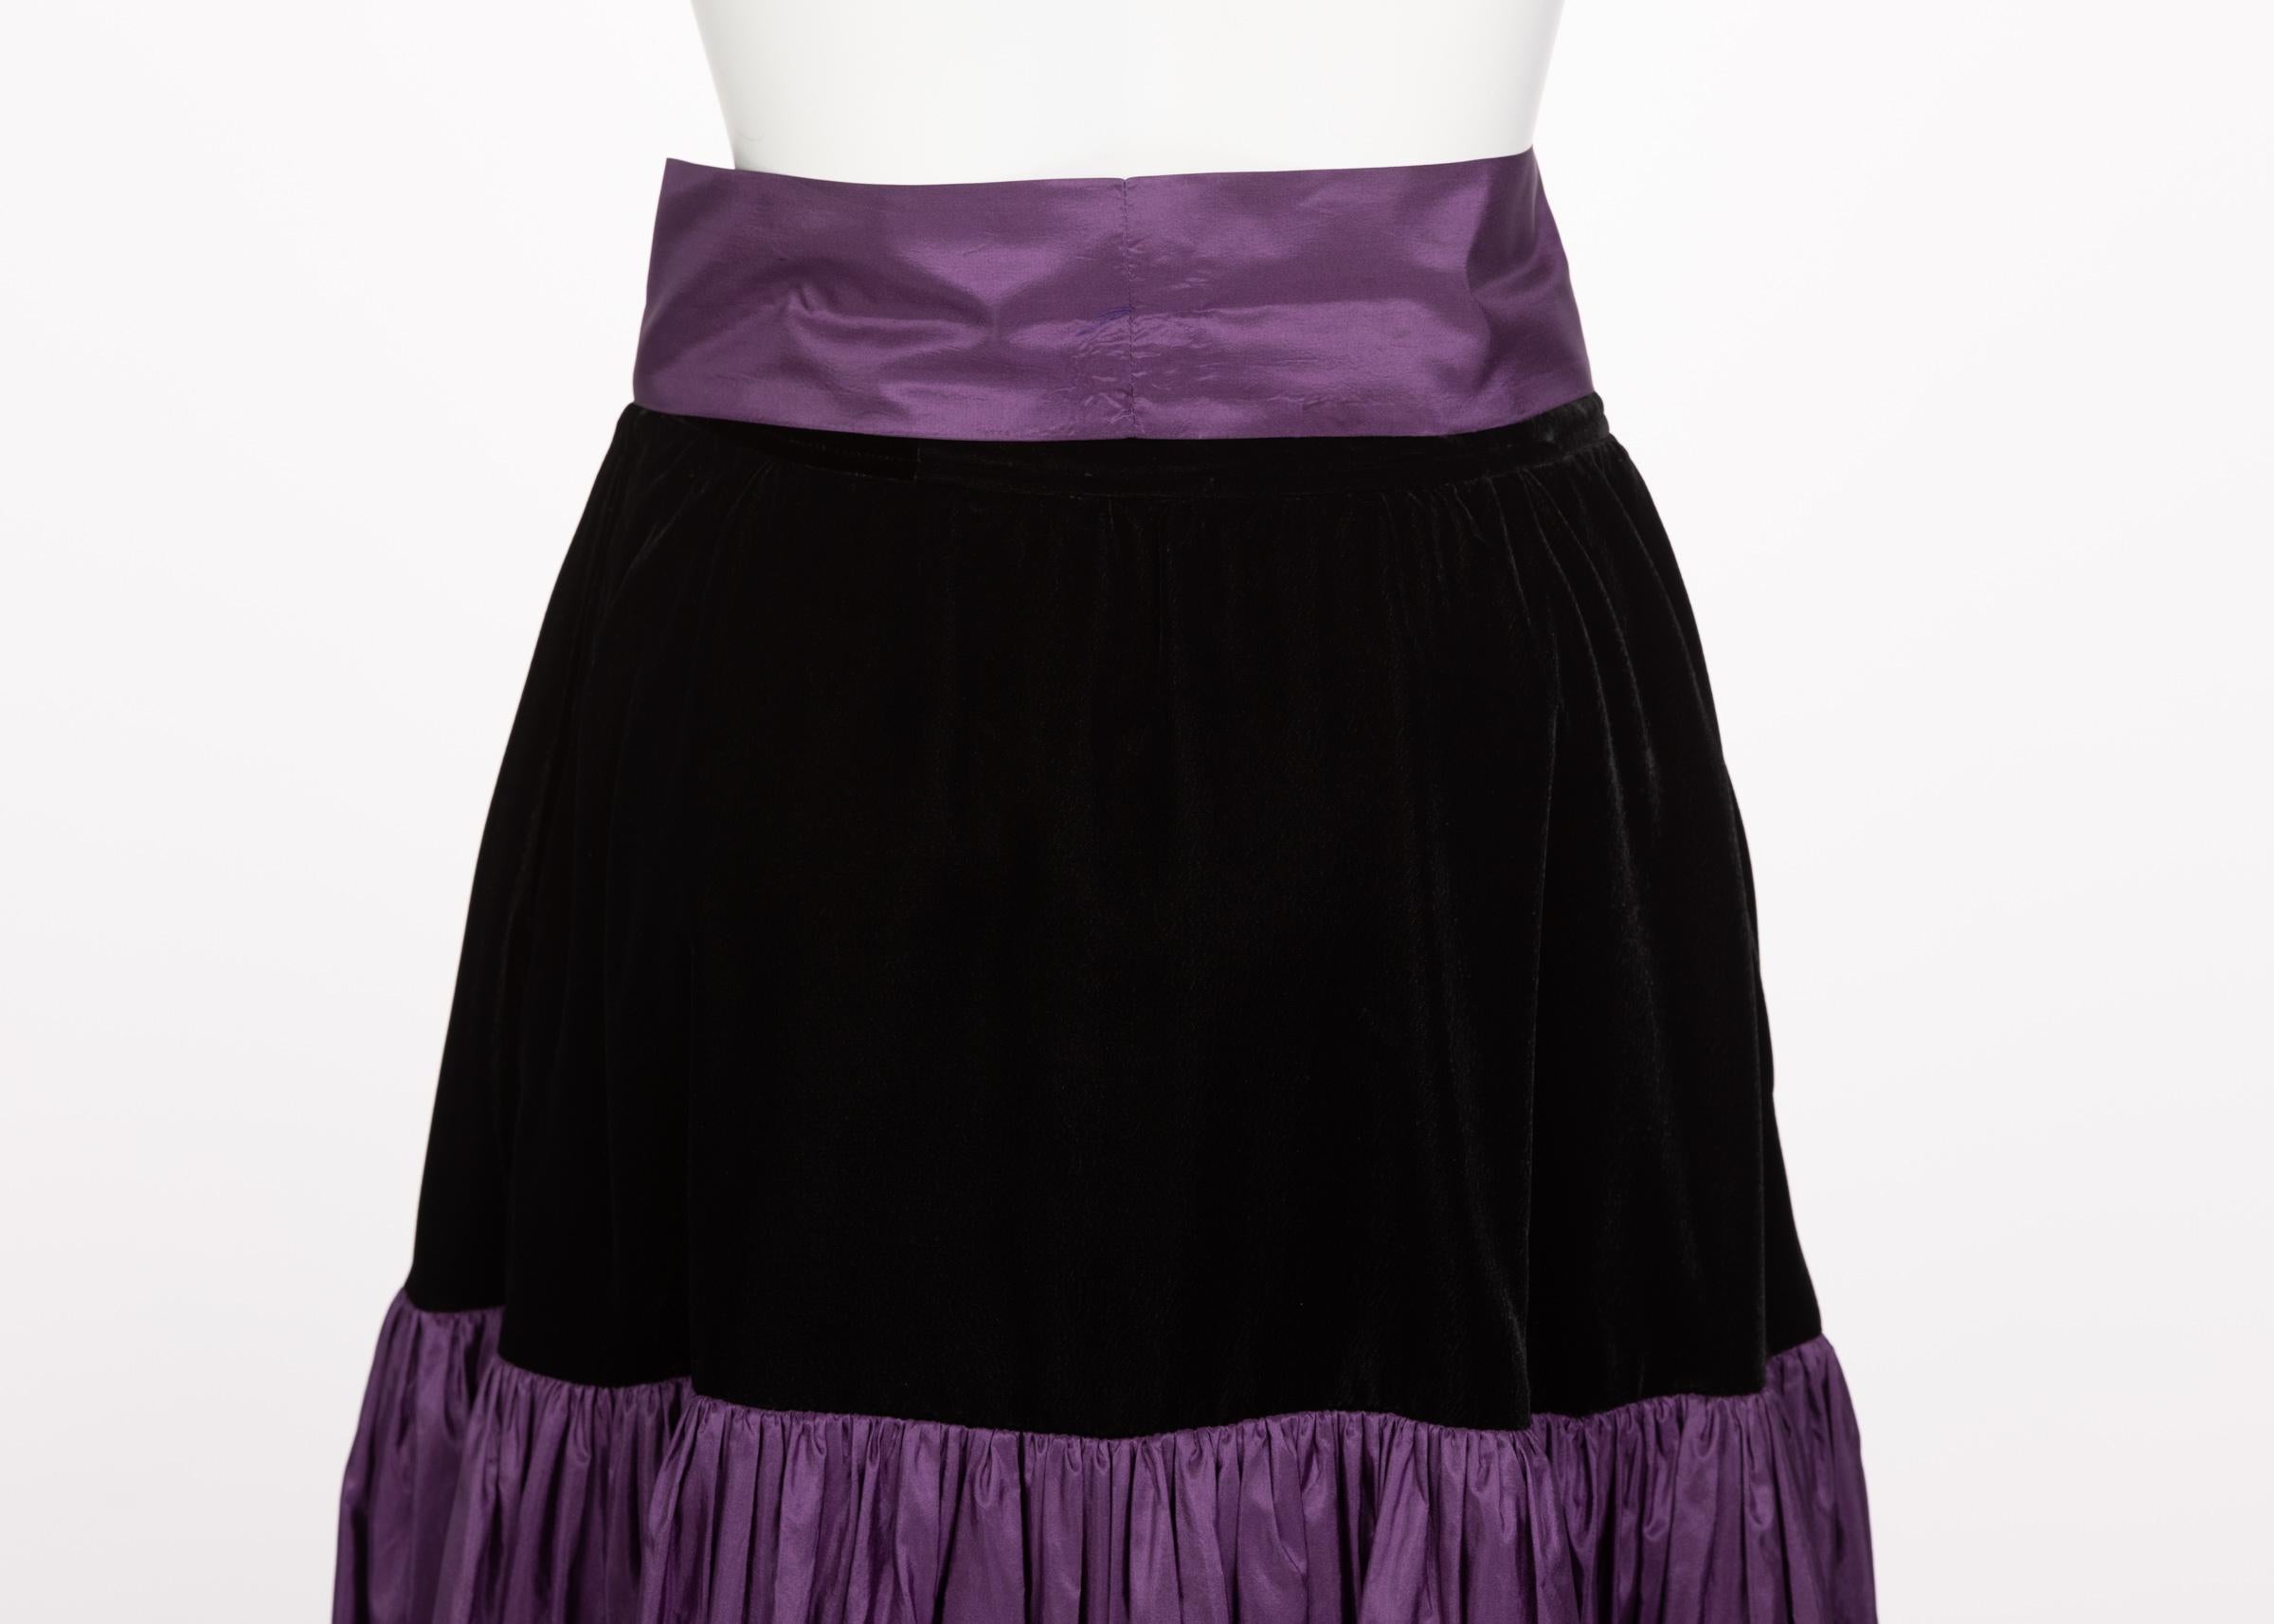 Yves Saint Laurent Skirt Russian Collection Purple Skirt YSL, 1970s For Sale 2